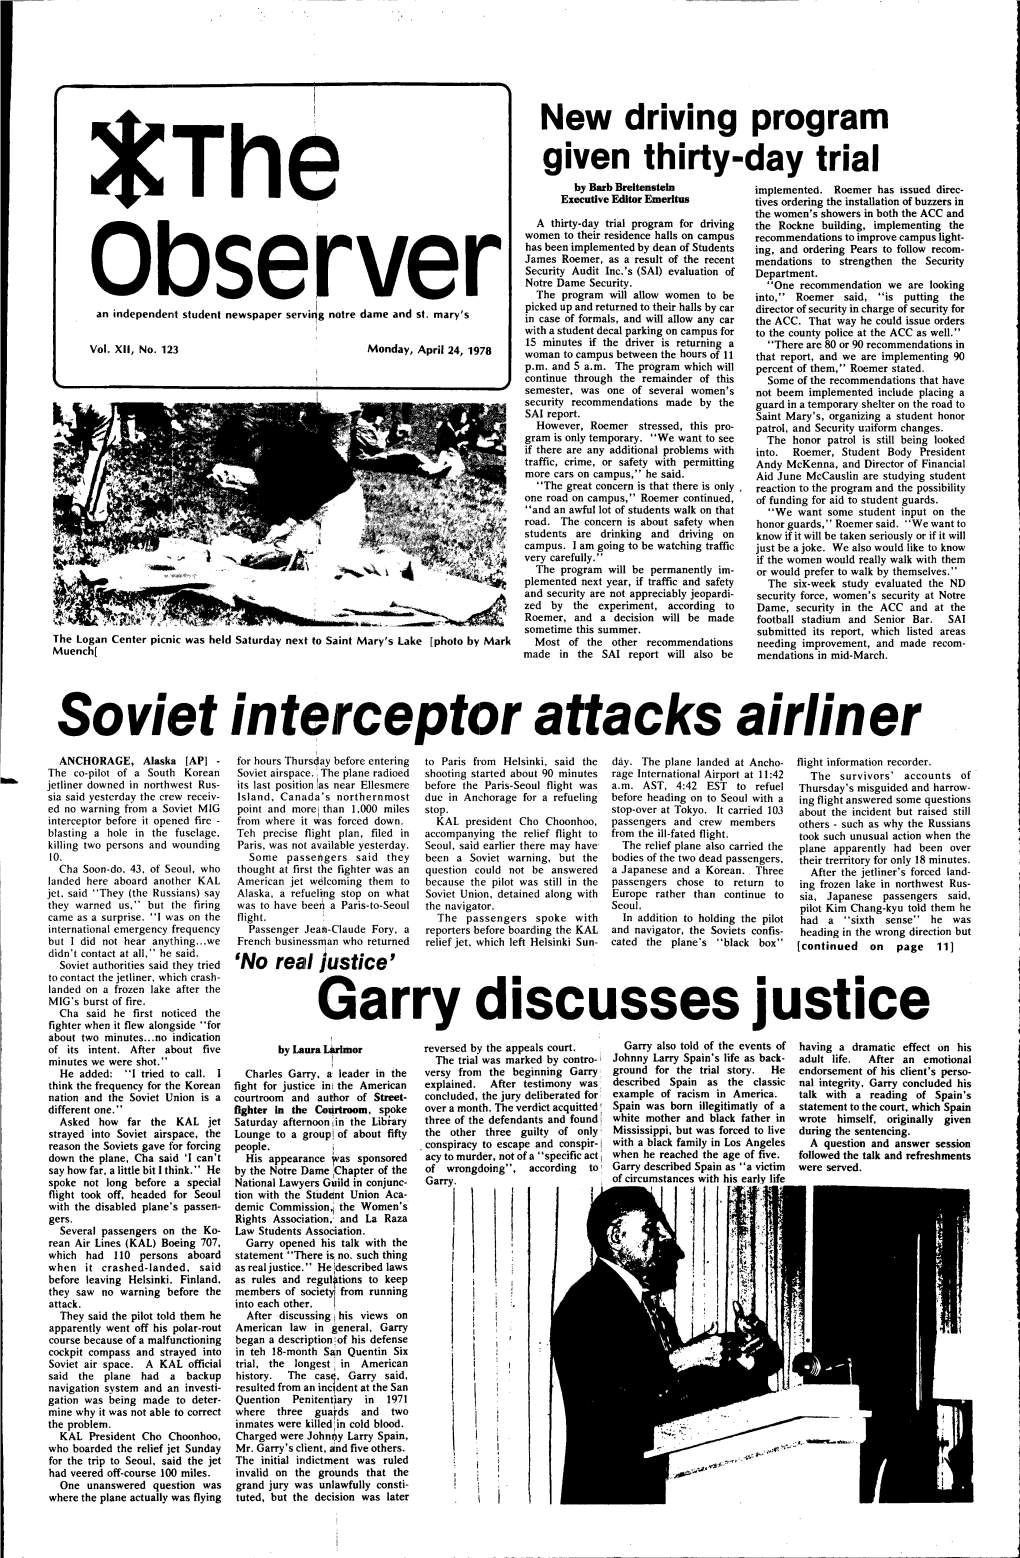 Soviet Interceptor Attacks Airliner Garry Discusses Justice